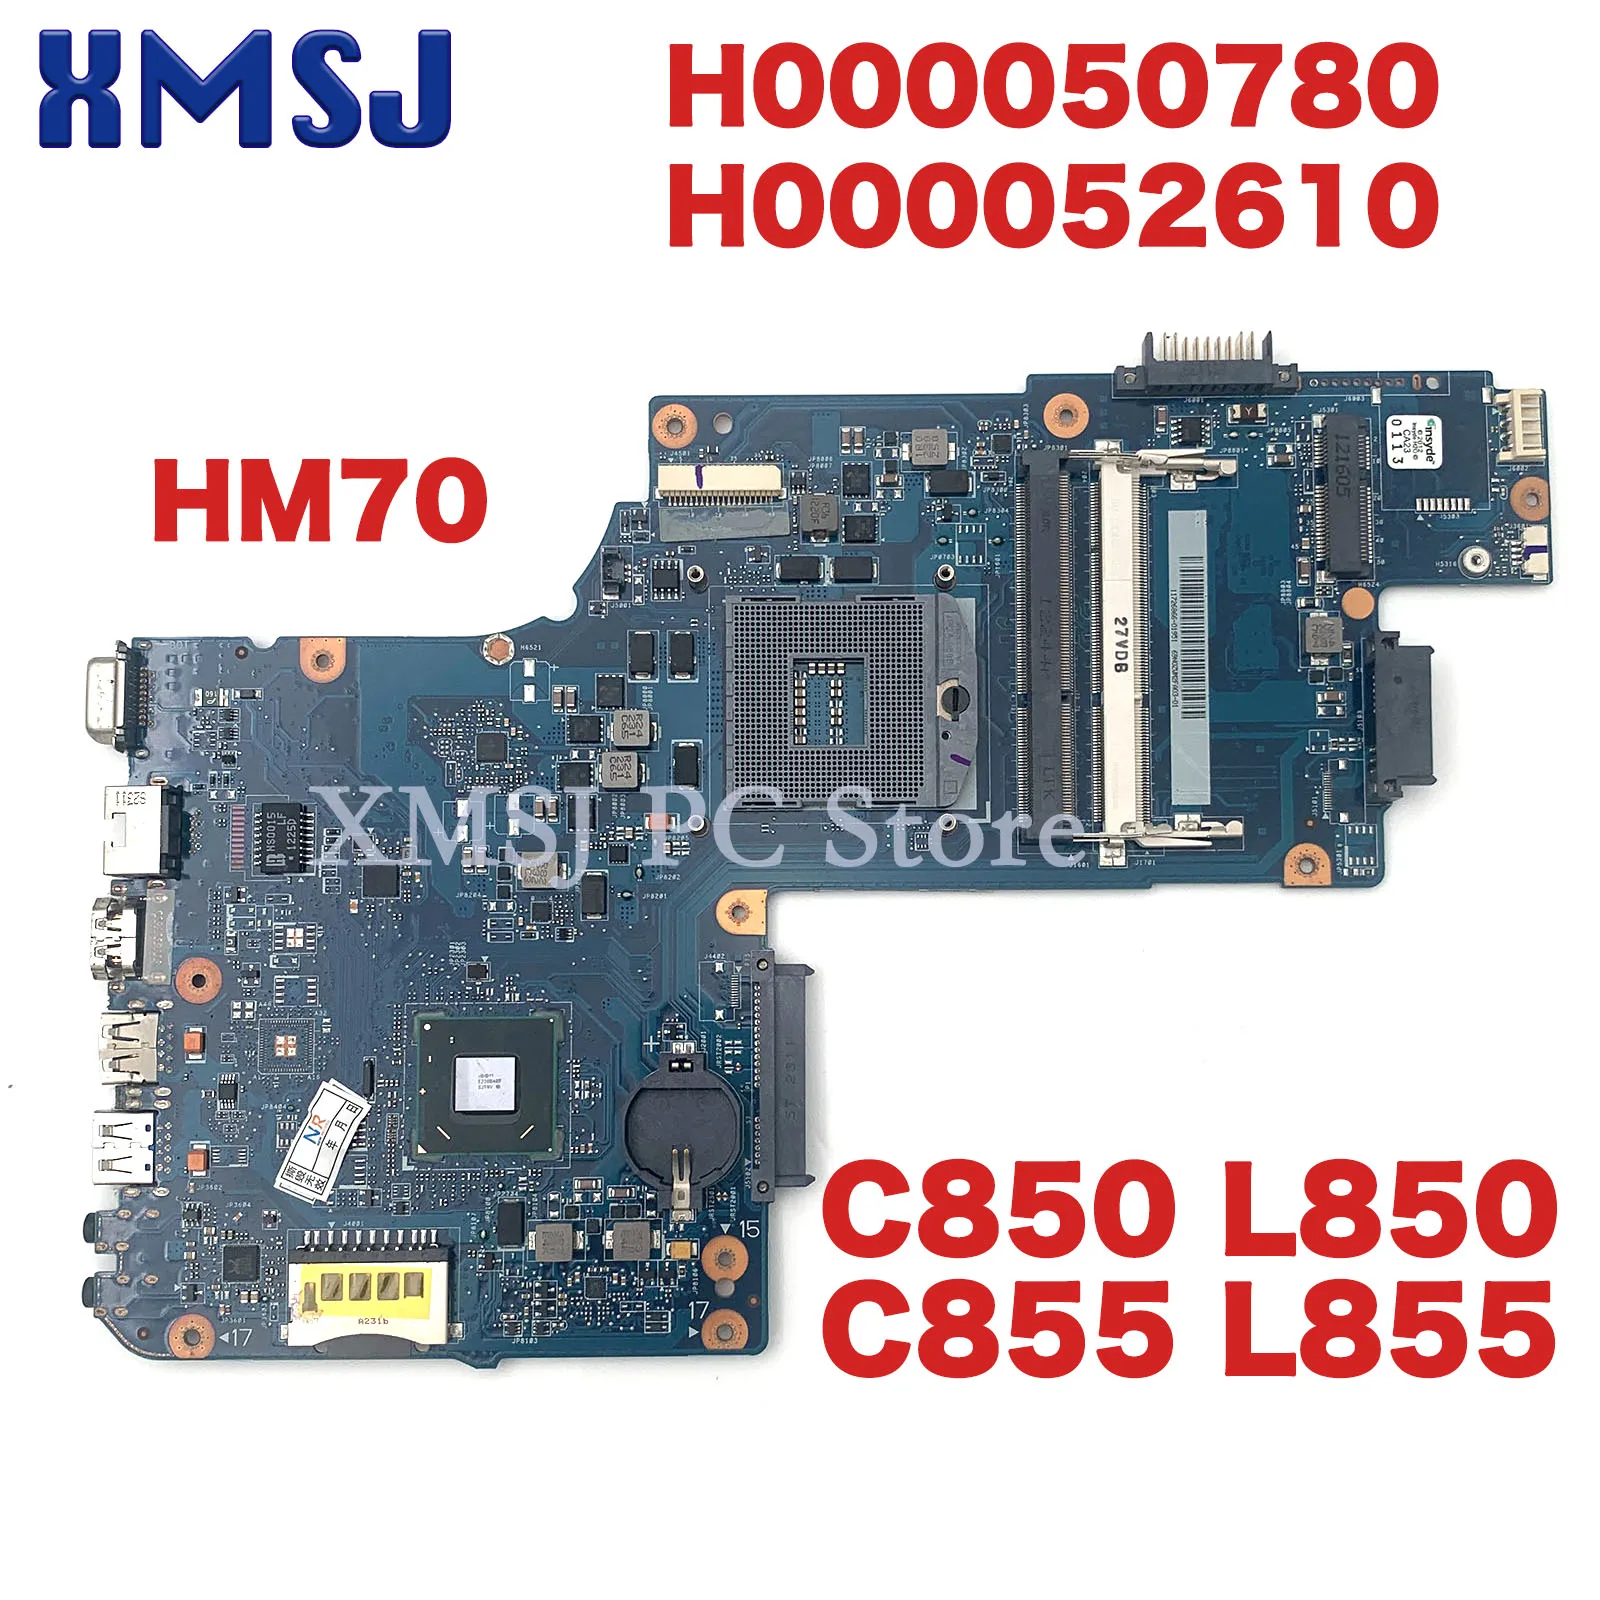 XMSJ for Toshiba Satellite C850 L850 C855 L855 Notebook Motherboard SJTNV HM70 DDR3 Free CPU H000050780 H000052610